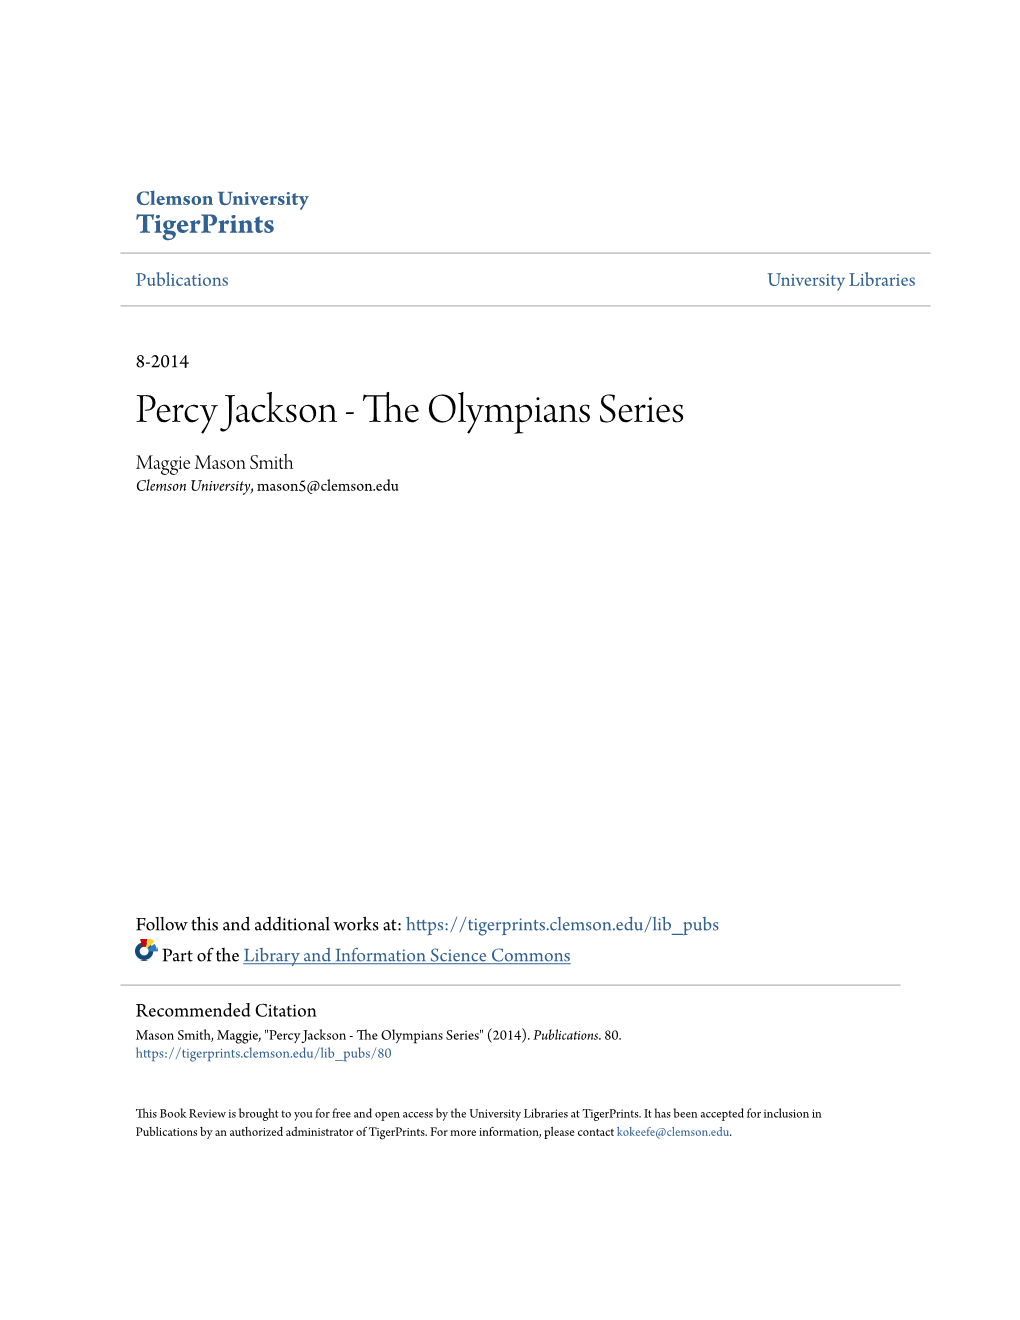 Percy Jackson - the Olympians Series Maggie Mason Smith Clemson University, Mason5@Clemson.Edu